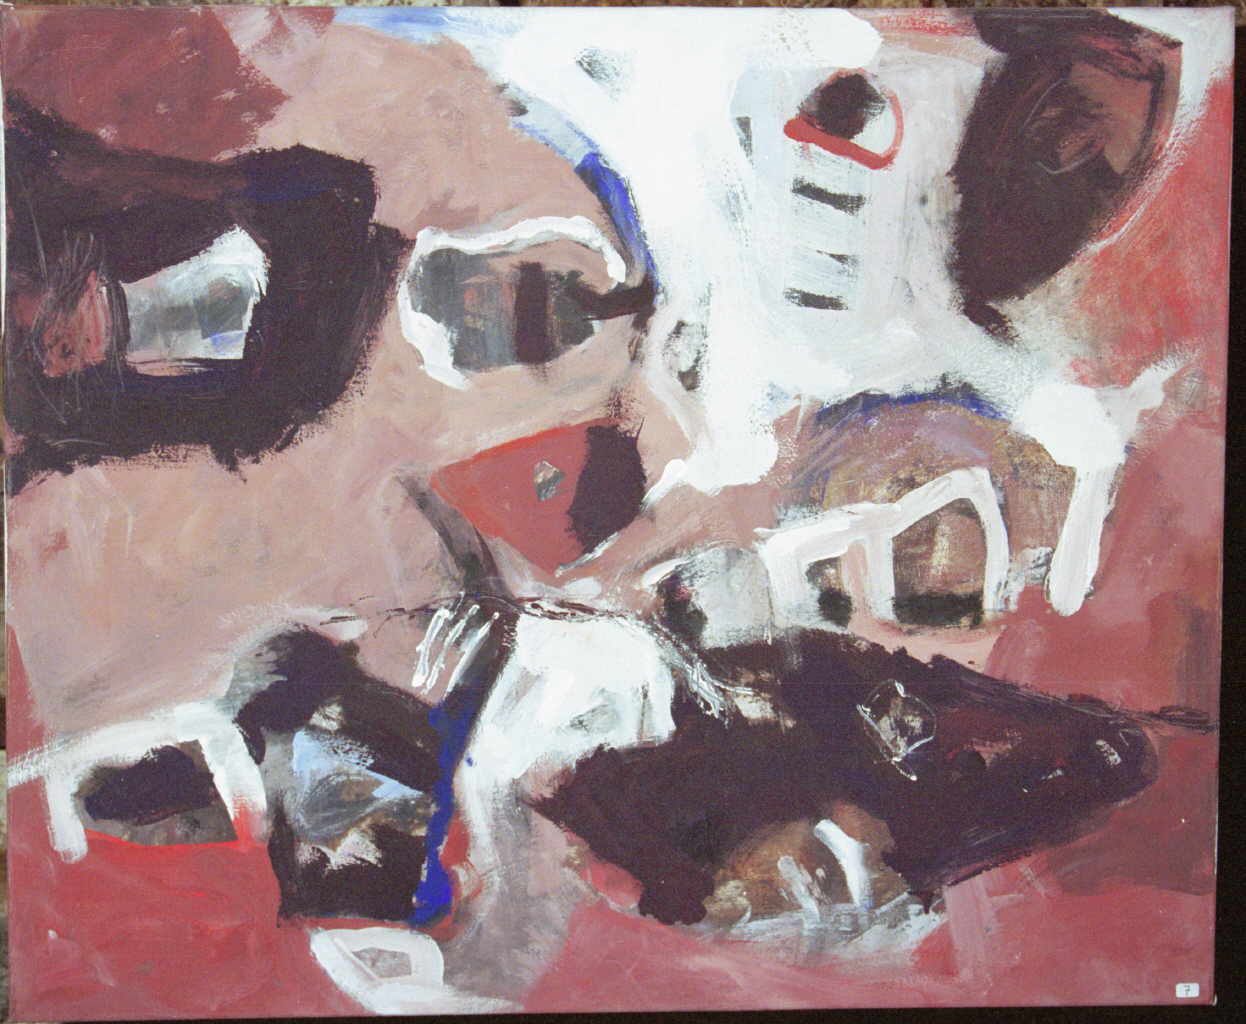 Schöttner Ilse 
"Stillleben", 1997
acrílico / tela
70 x 85 cm